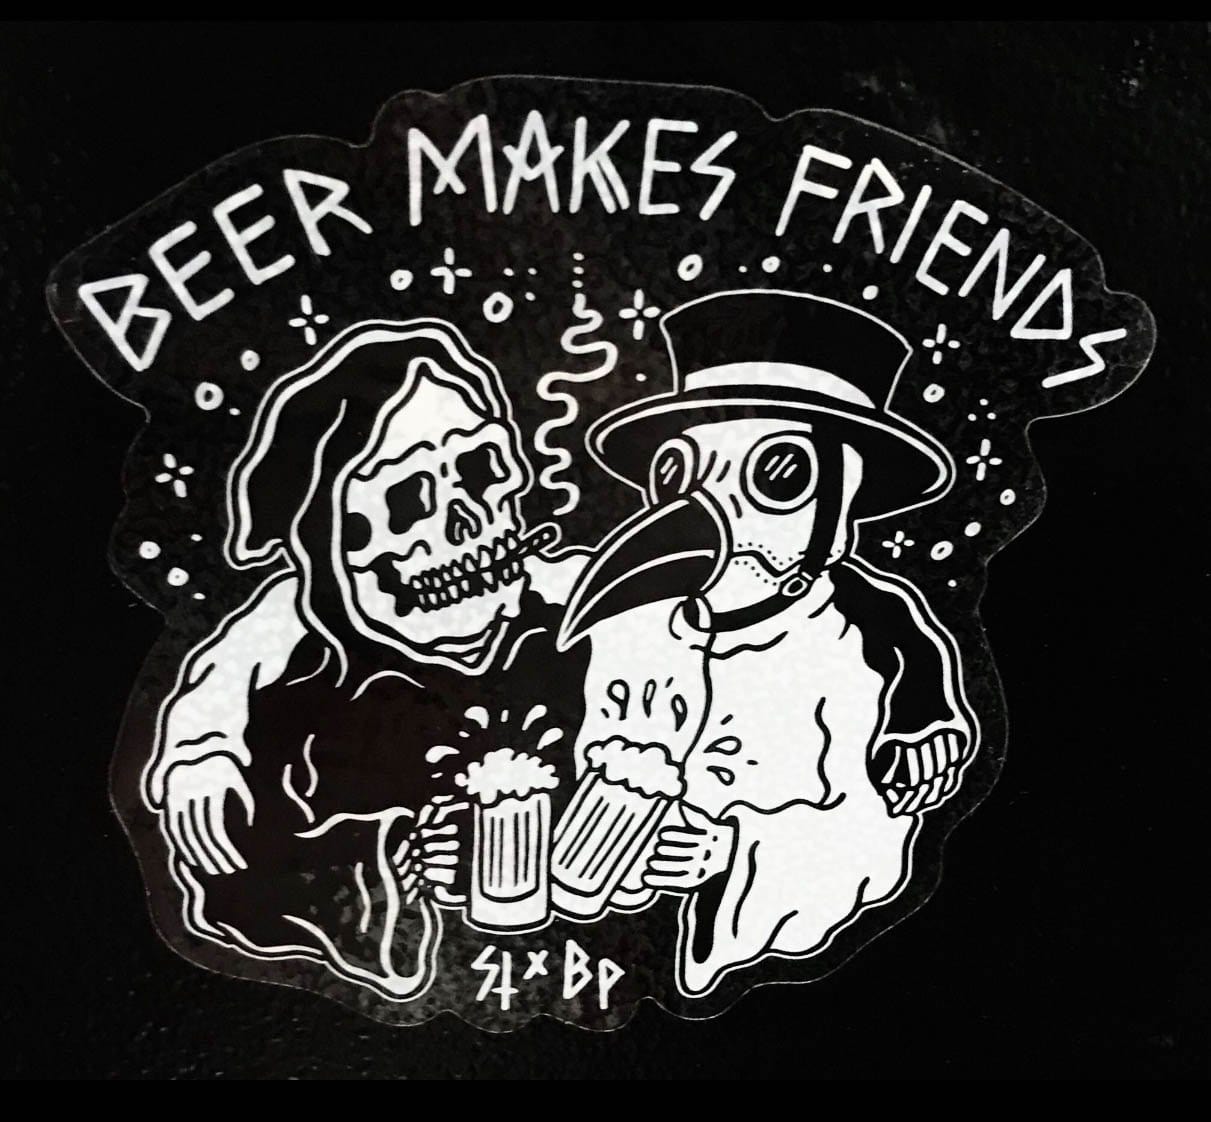 Beer Makes Friends - Koozie from Black Plague Brewing Shop